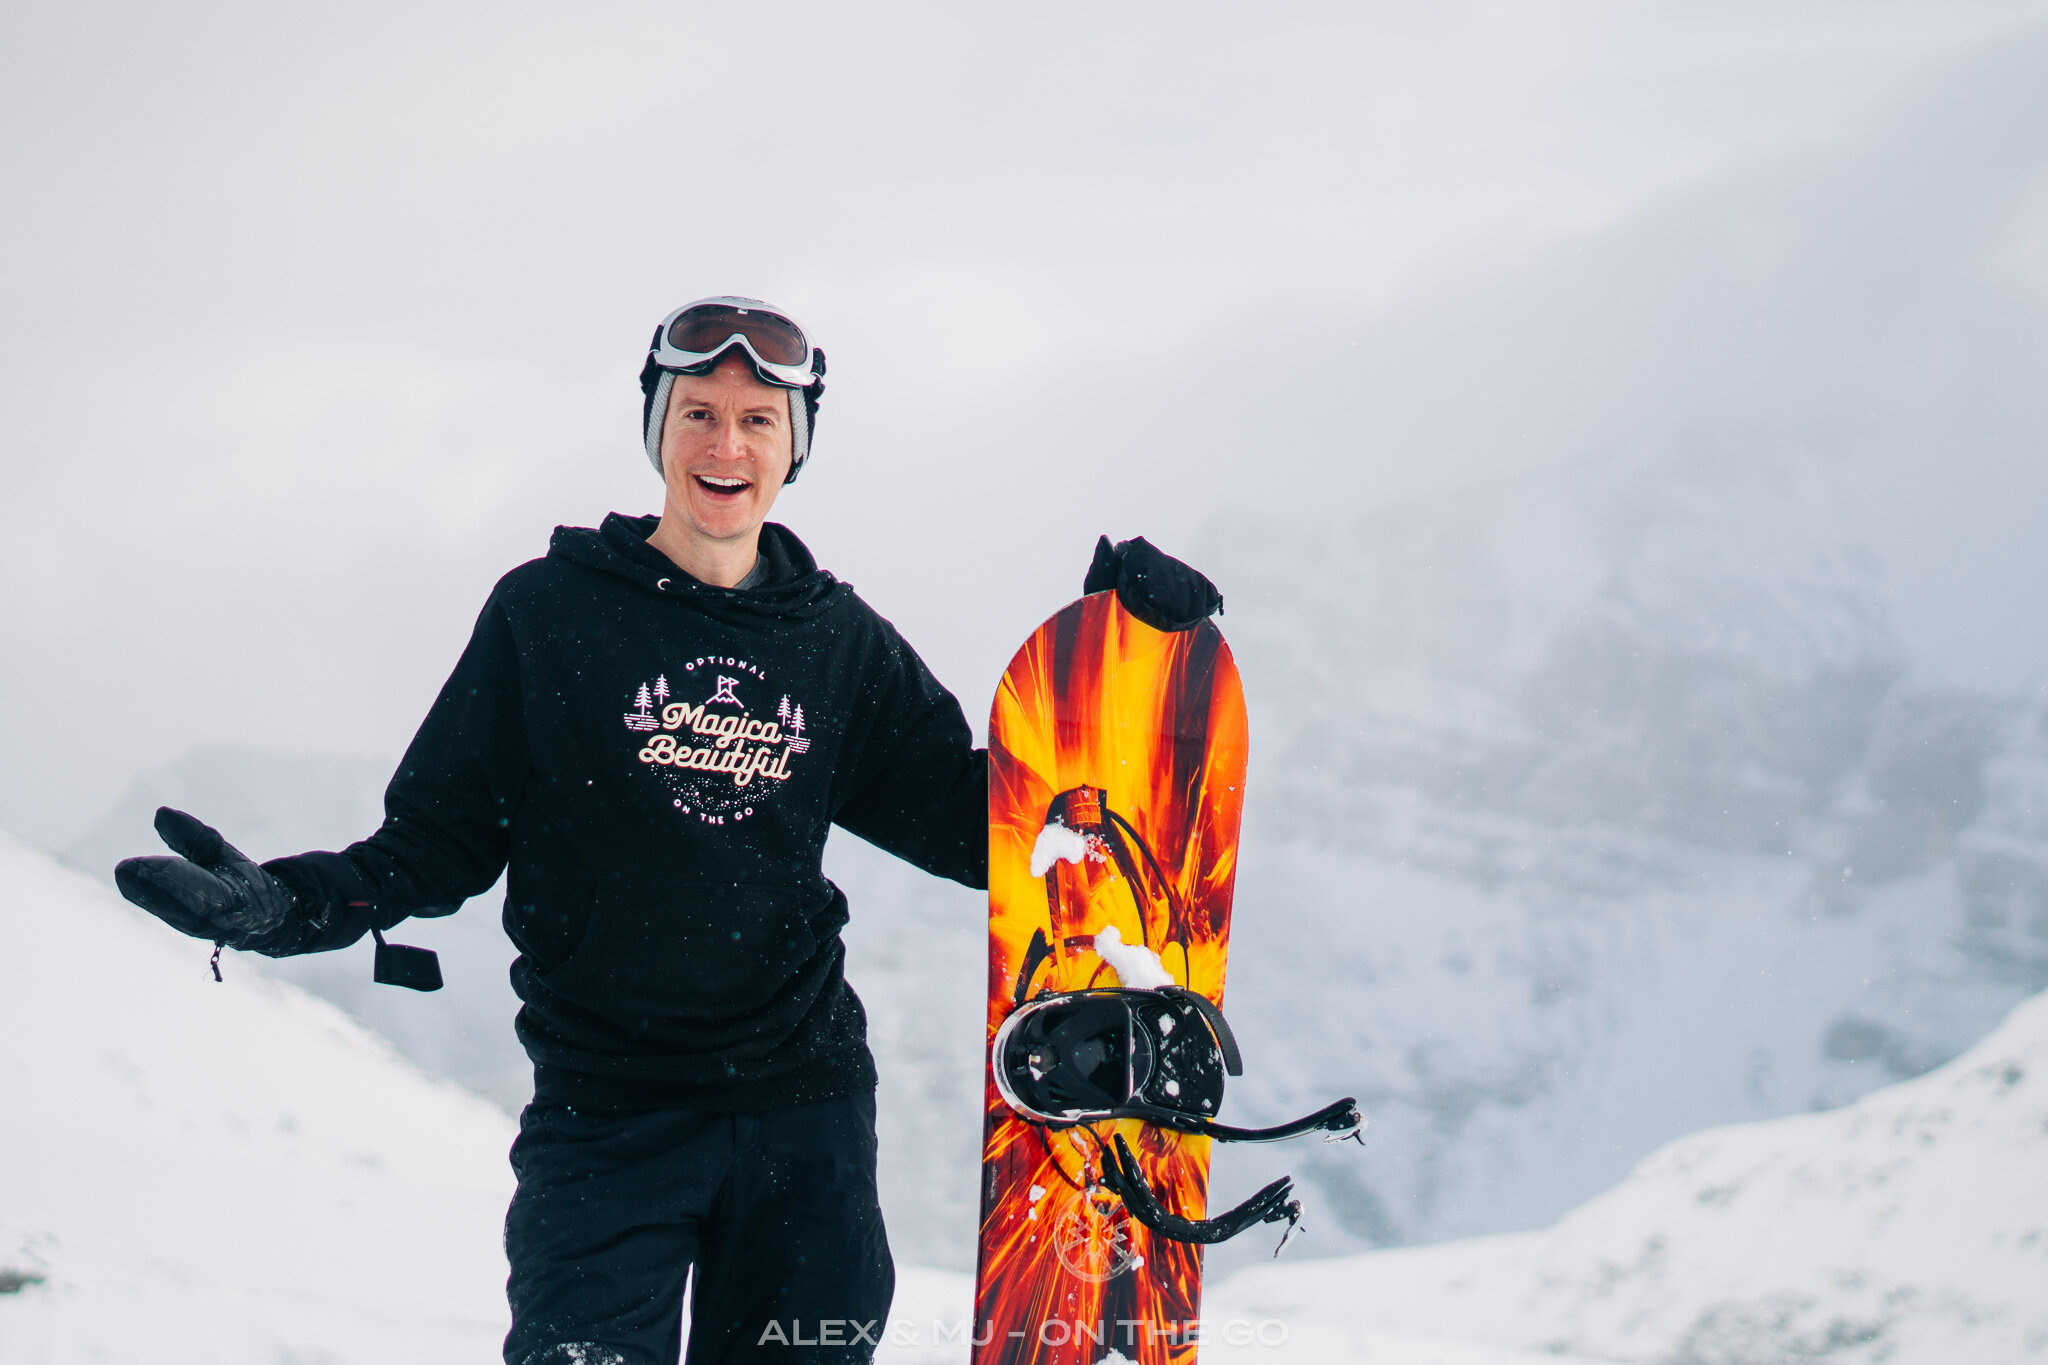 Alex-MJ-On-the-GO-ski resort_lequel_choisir_Sunshine_Alex.jpg